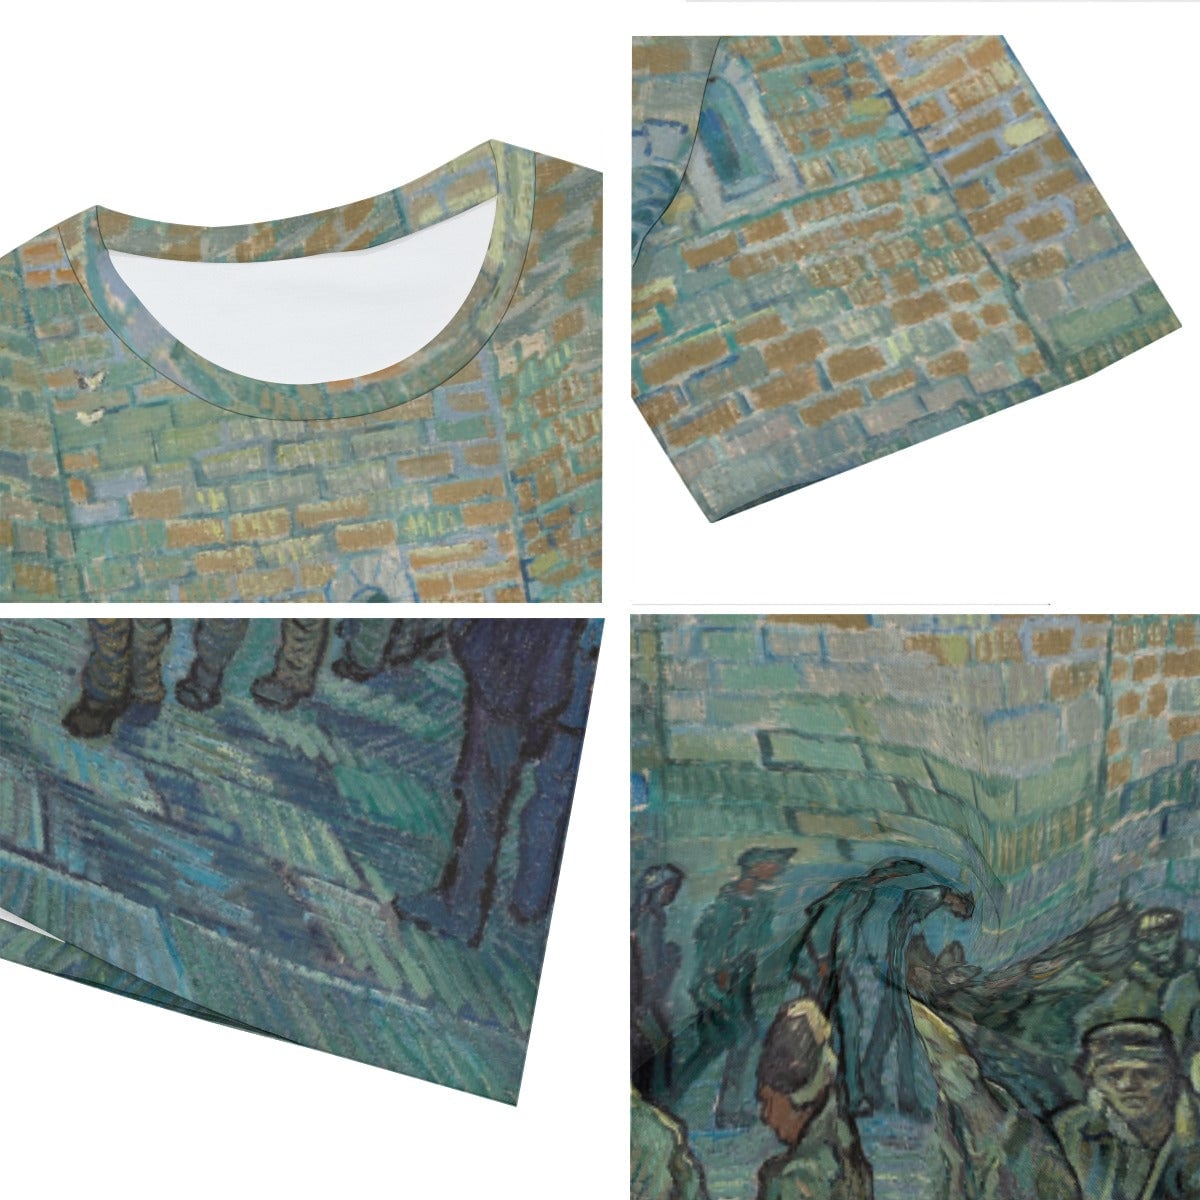 Prisoners Exercising Vincent van Gogh T-Shirt